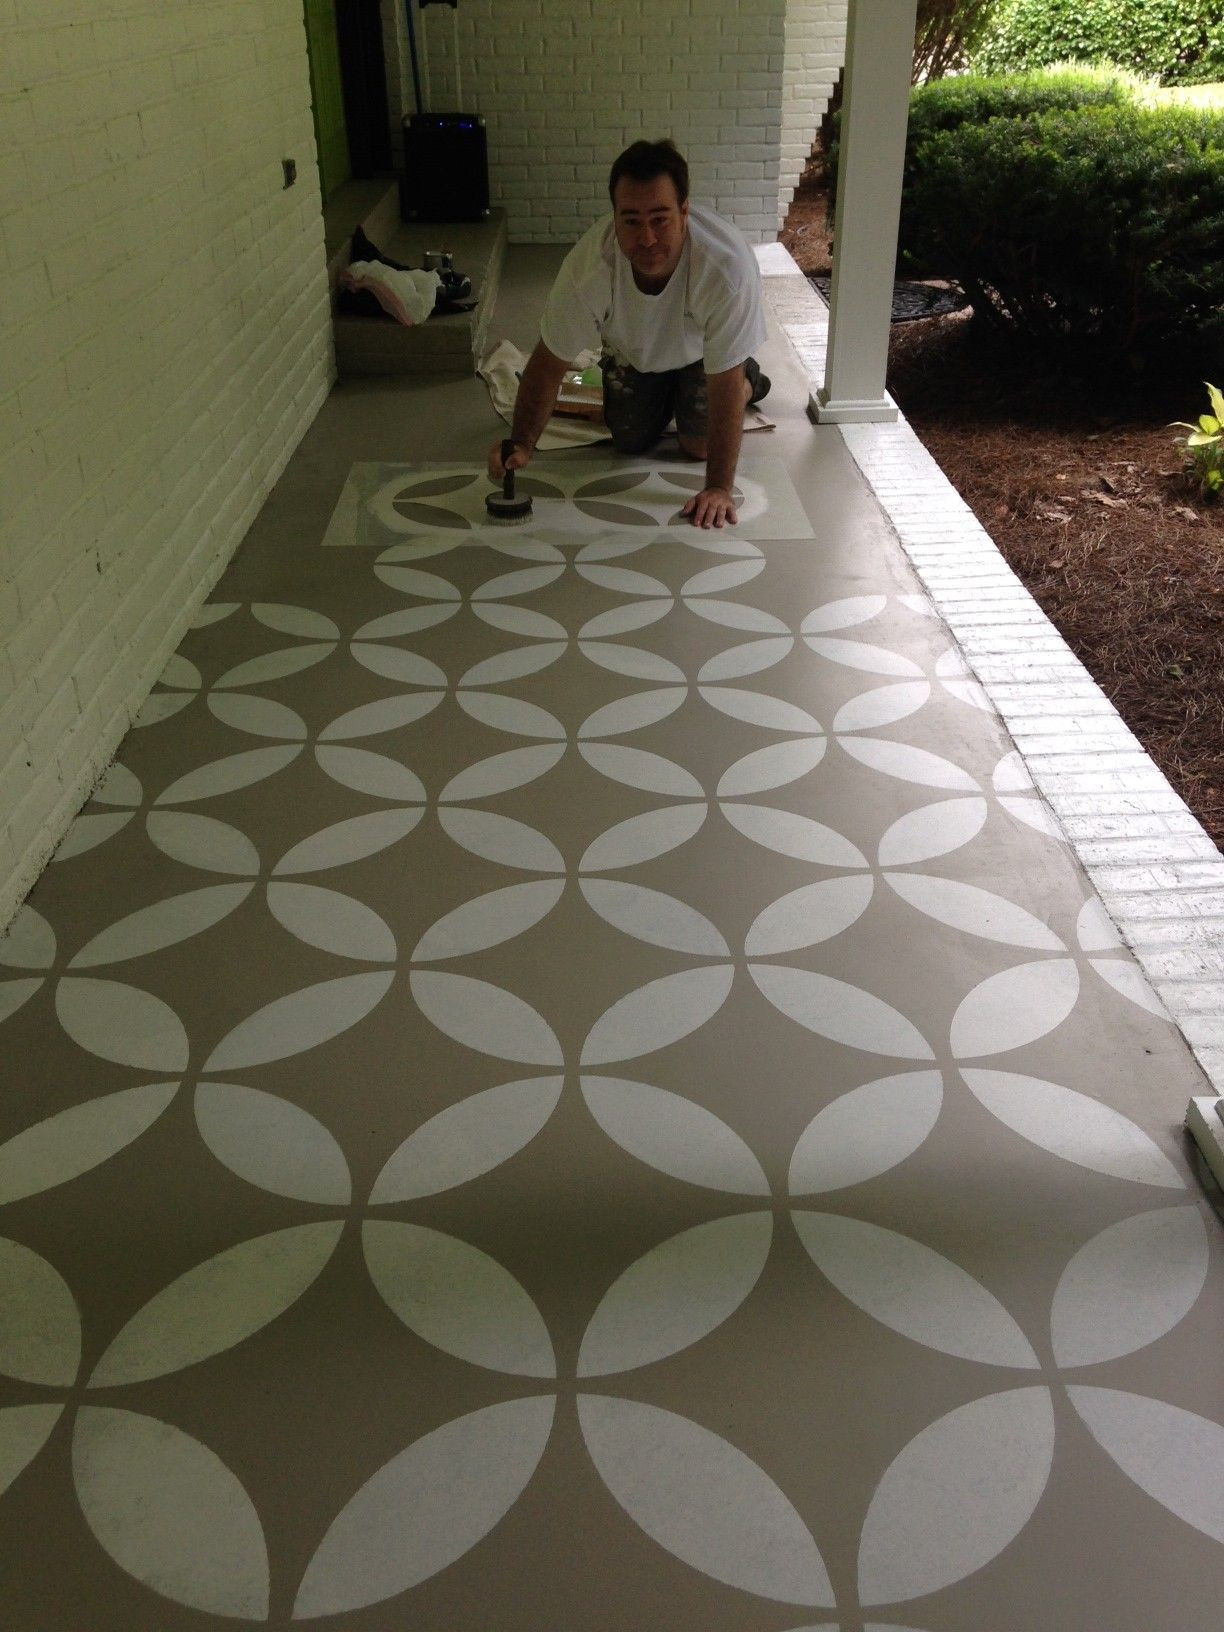 Best ideas about Painted Concrete Patio
. Save or Pin Concrete Patio Floor Paint Ideas yard Now.